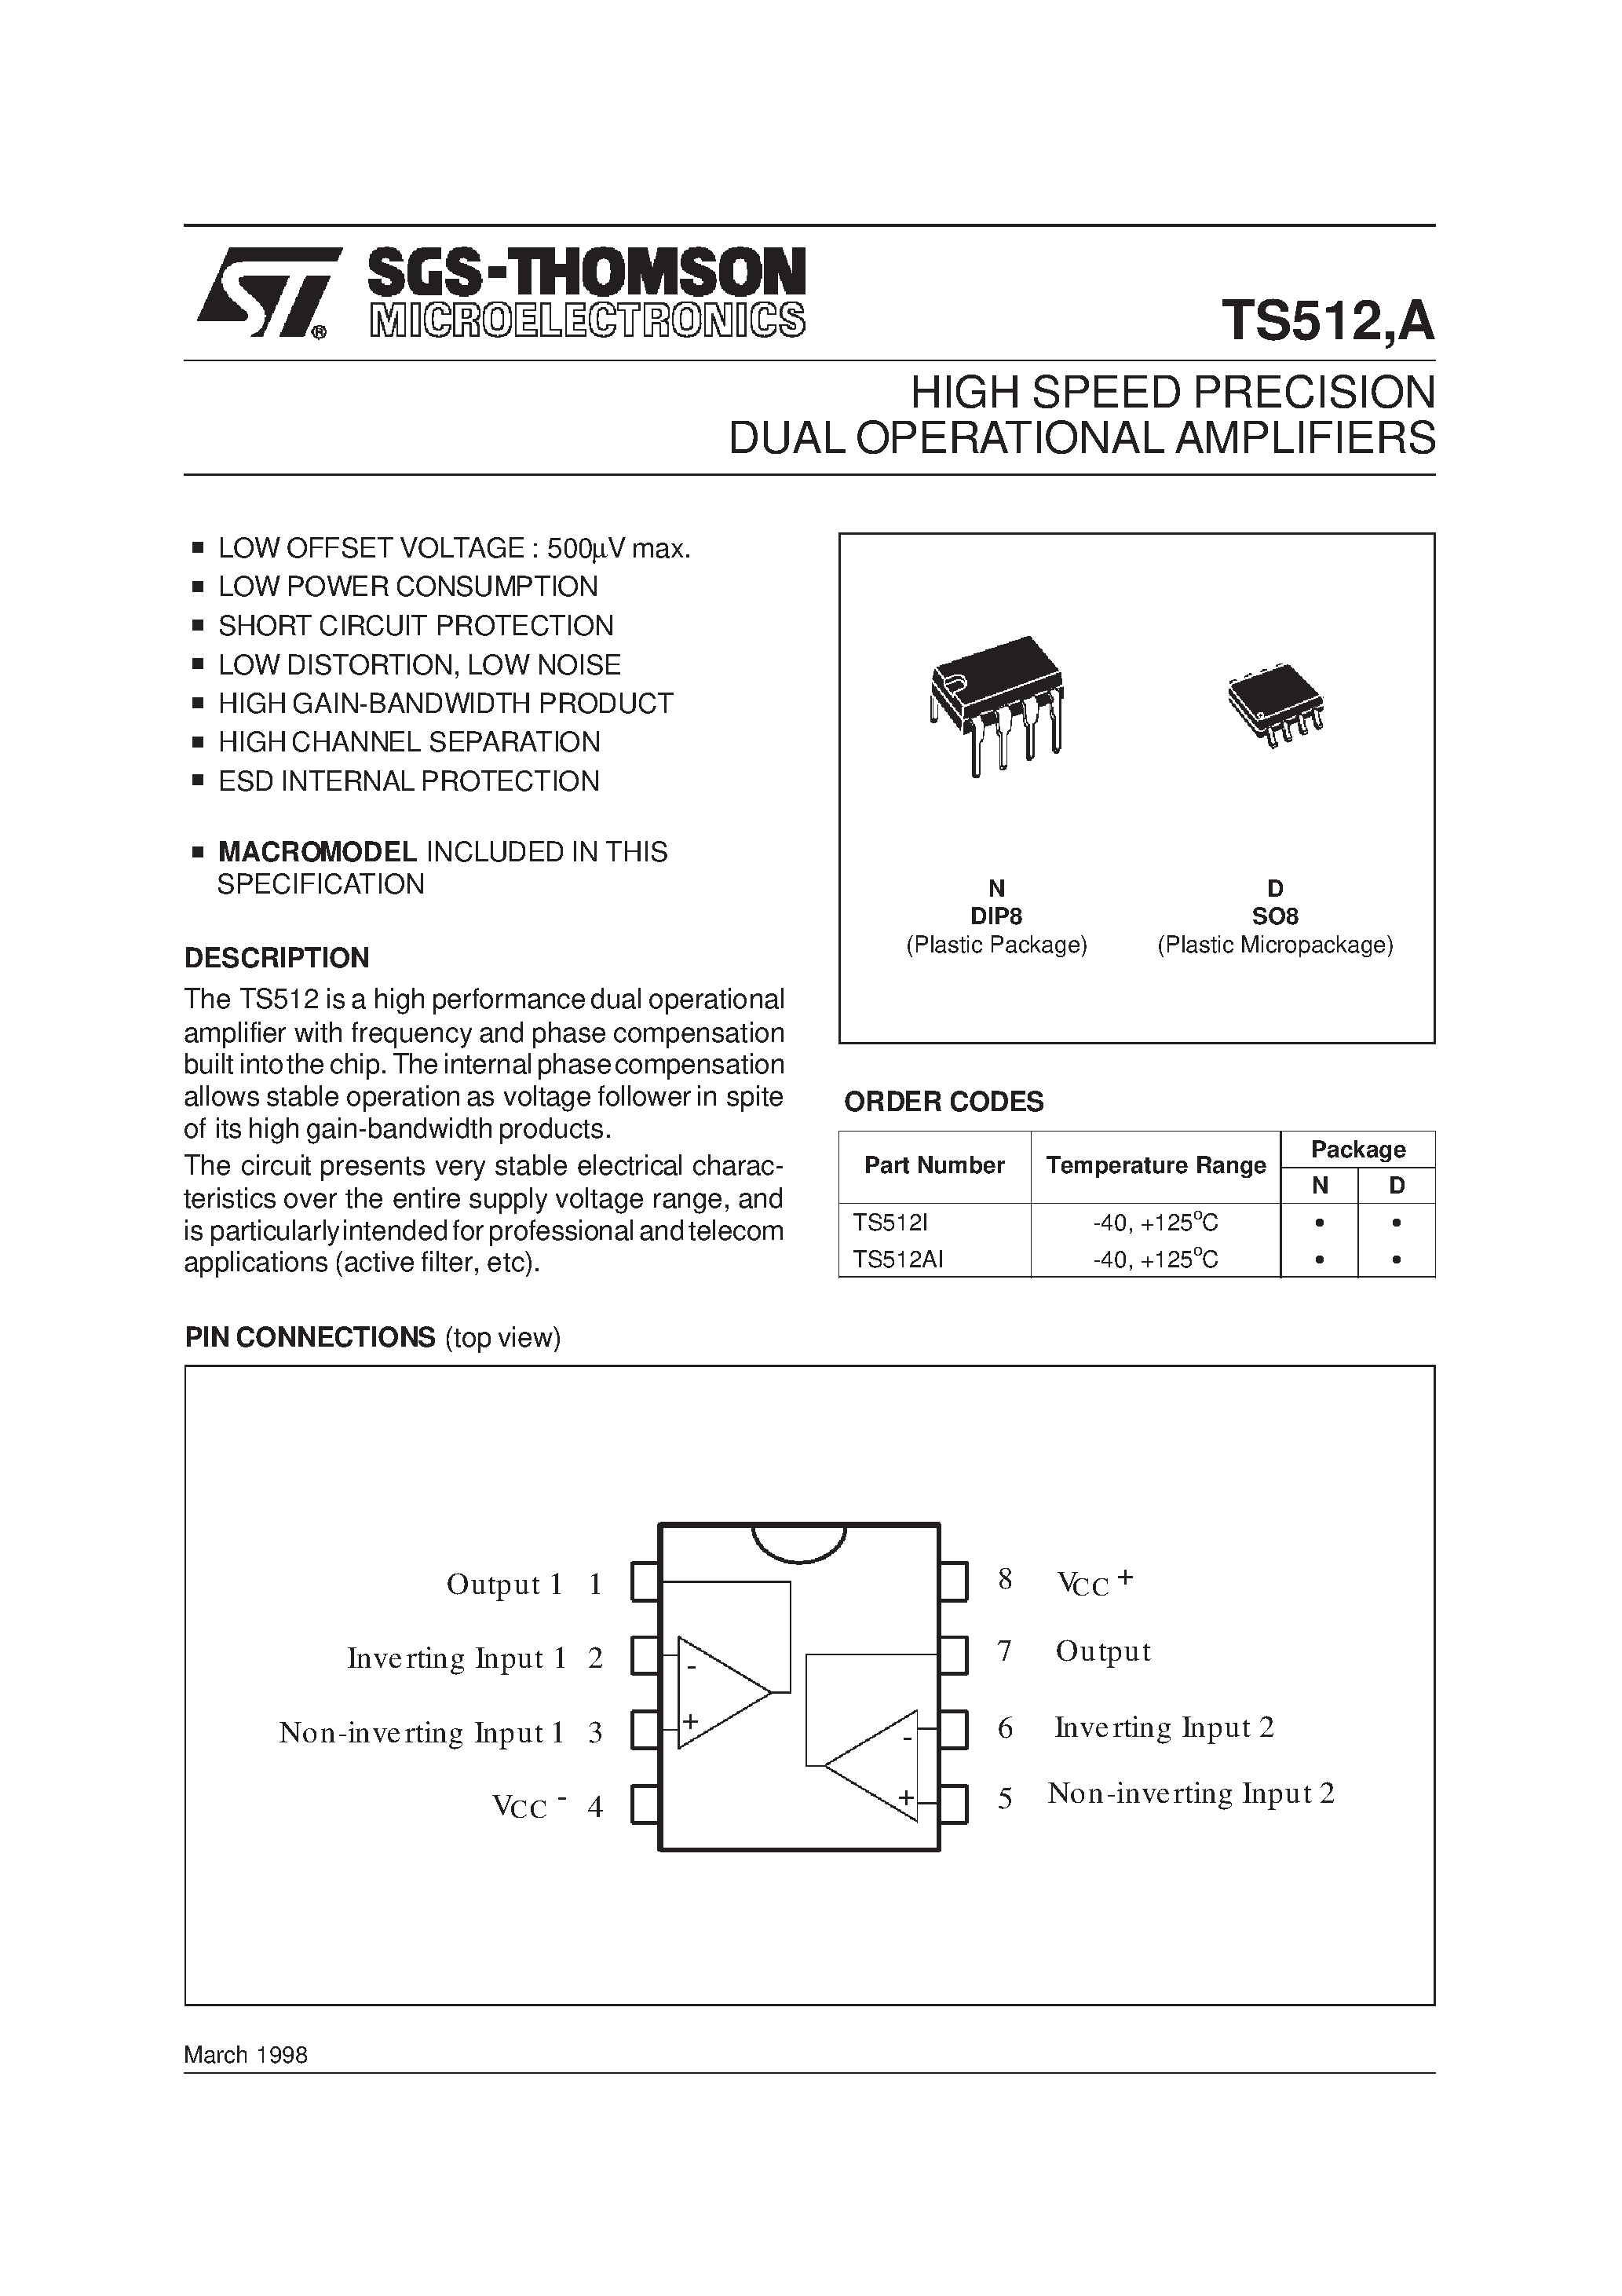 Datasheet TS512IA - HIGH SPEED PRECISION DUAL OPERATIONAL AMPLIFIERS page 1